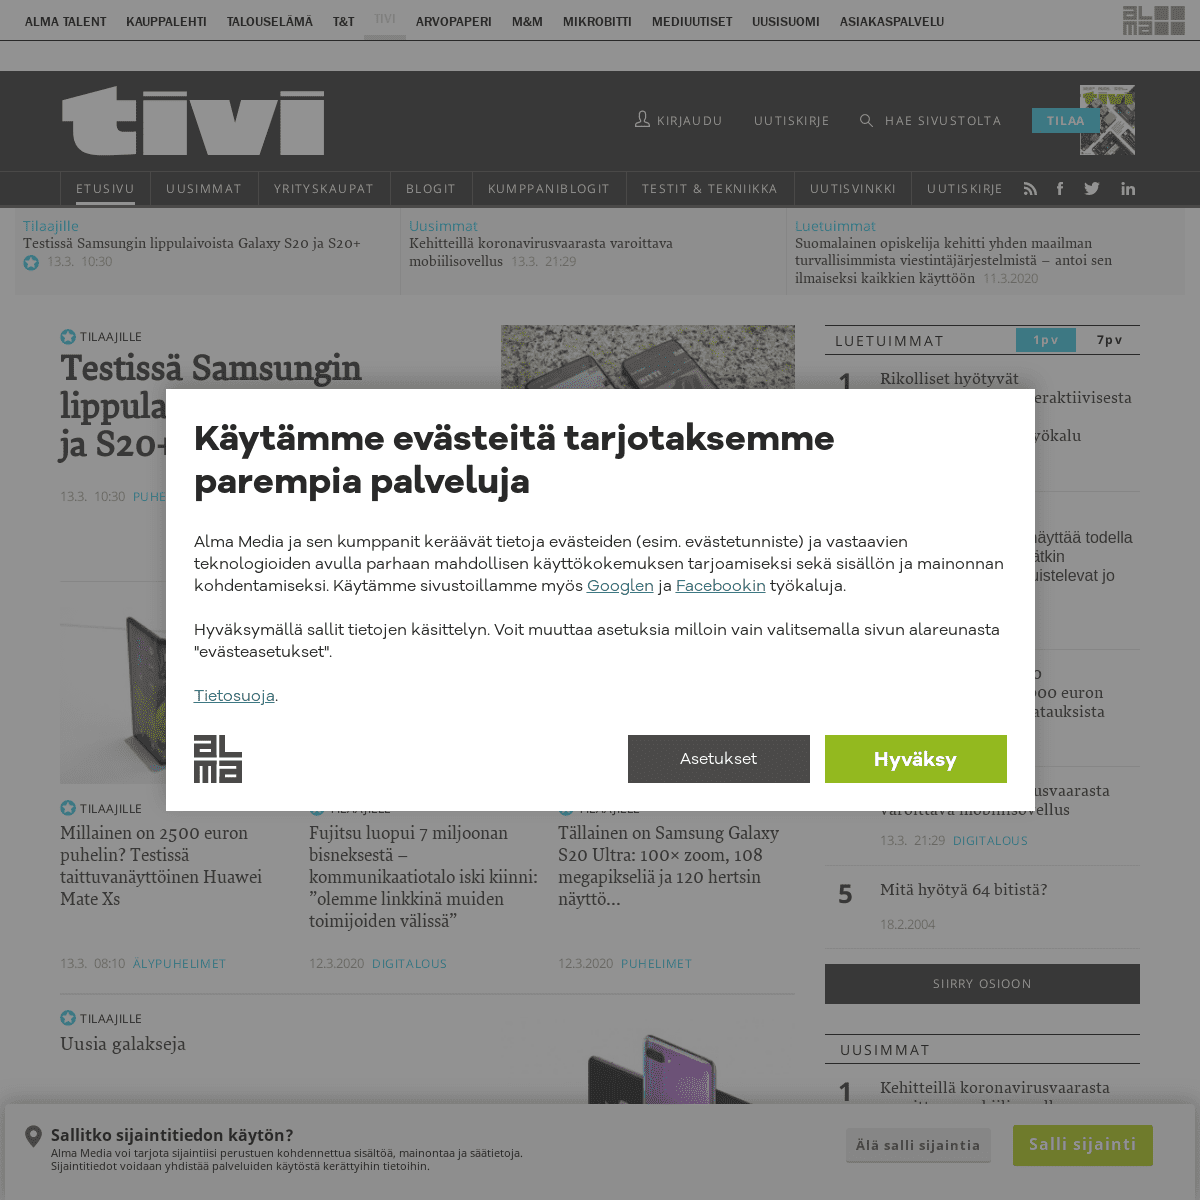 A complete backup of tivi.fi